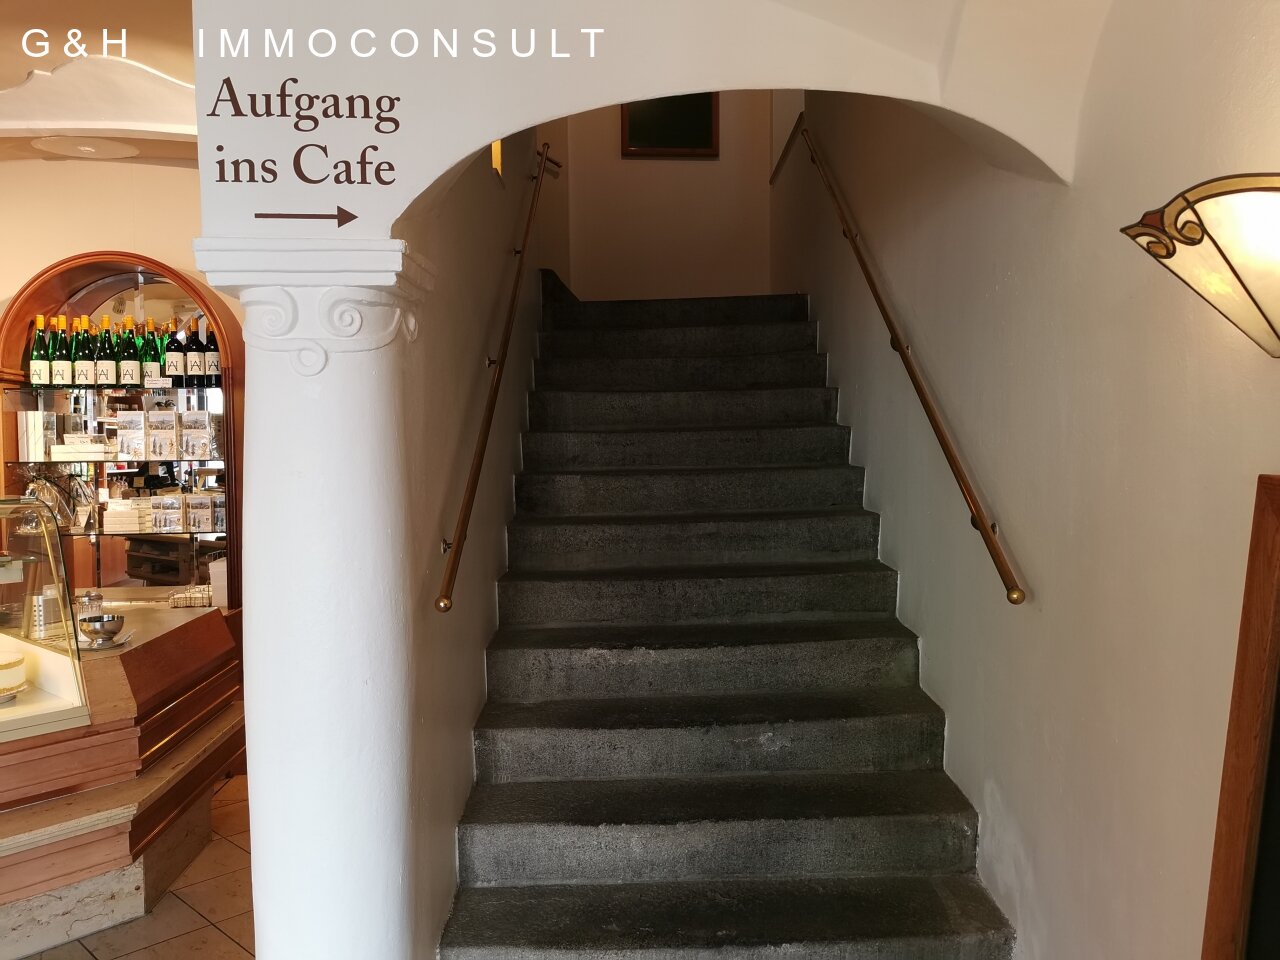 Aufgang Café/Restaurant